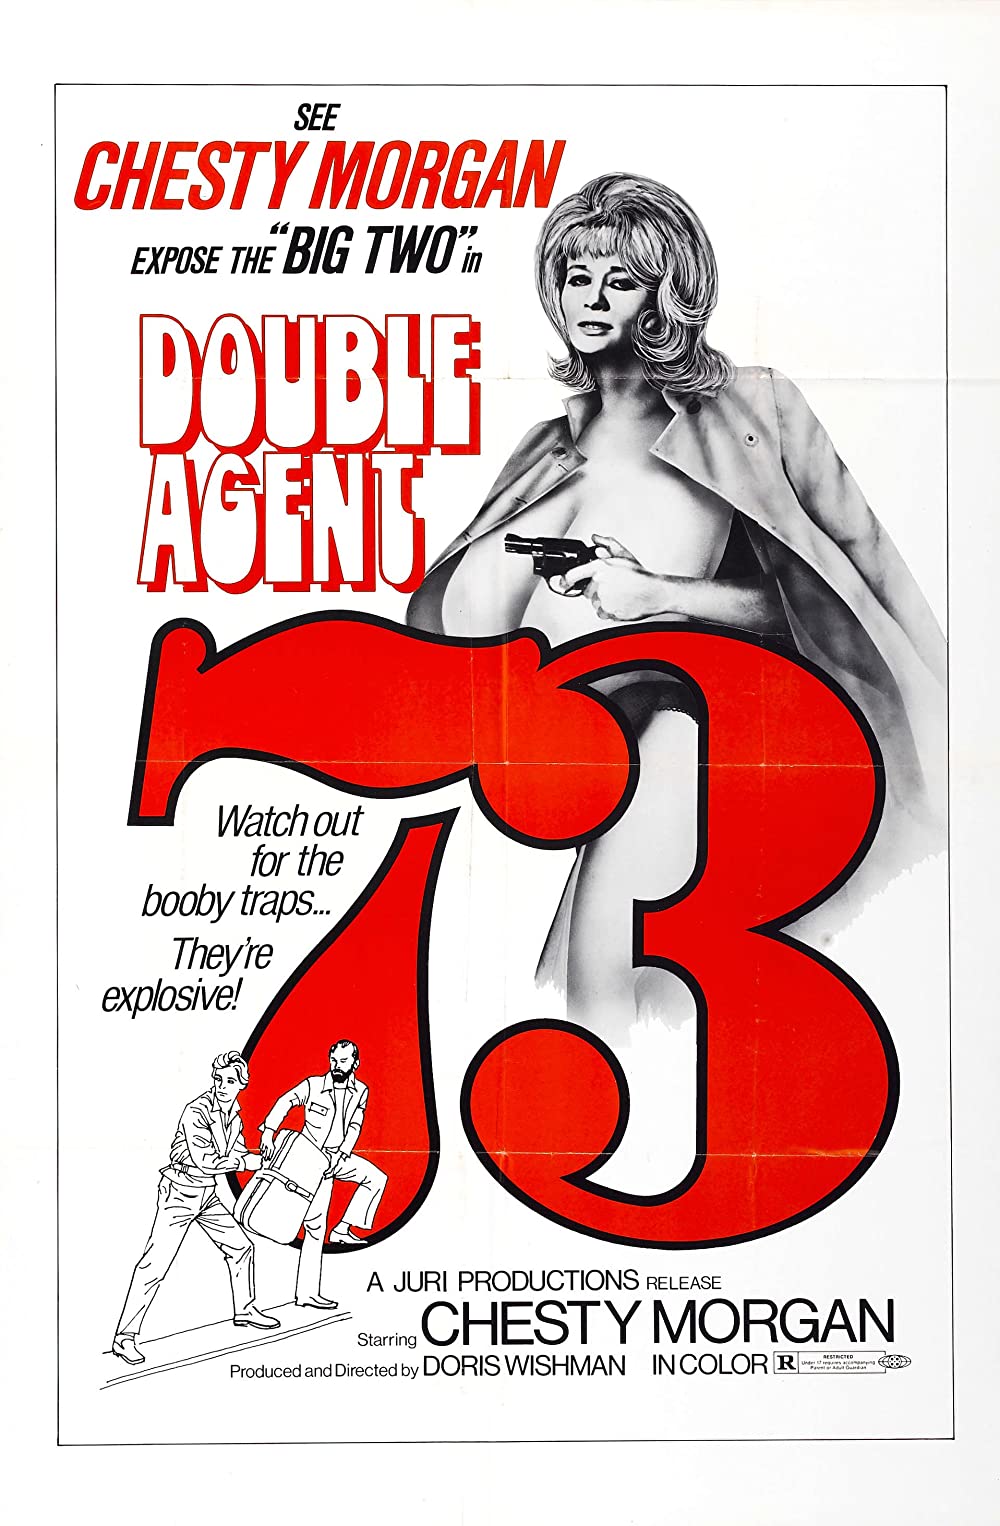 Filmbeschreibung zu Double Agent 73